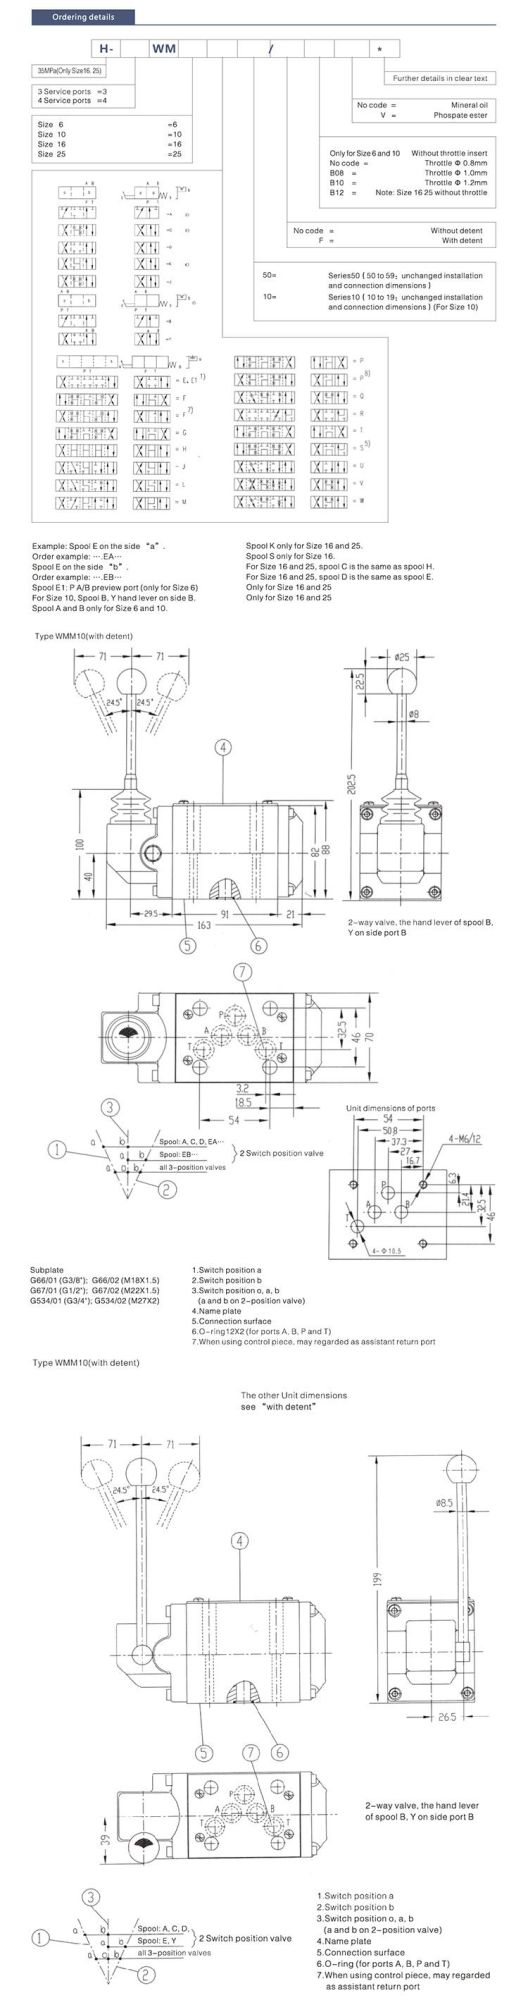 4WMM10 Hydraulic Manual Directional Spool Control Valves